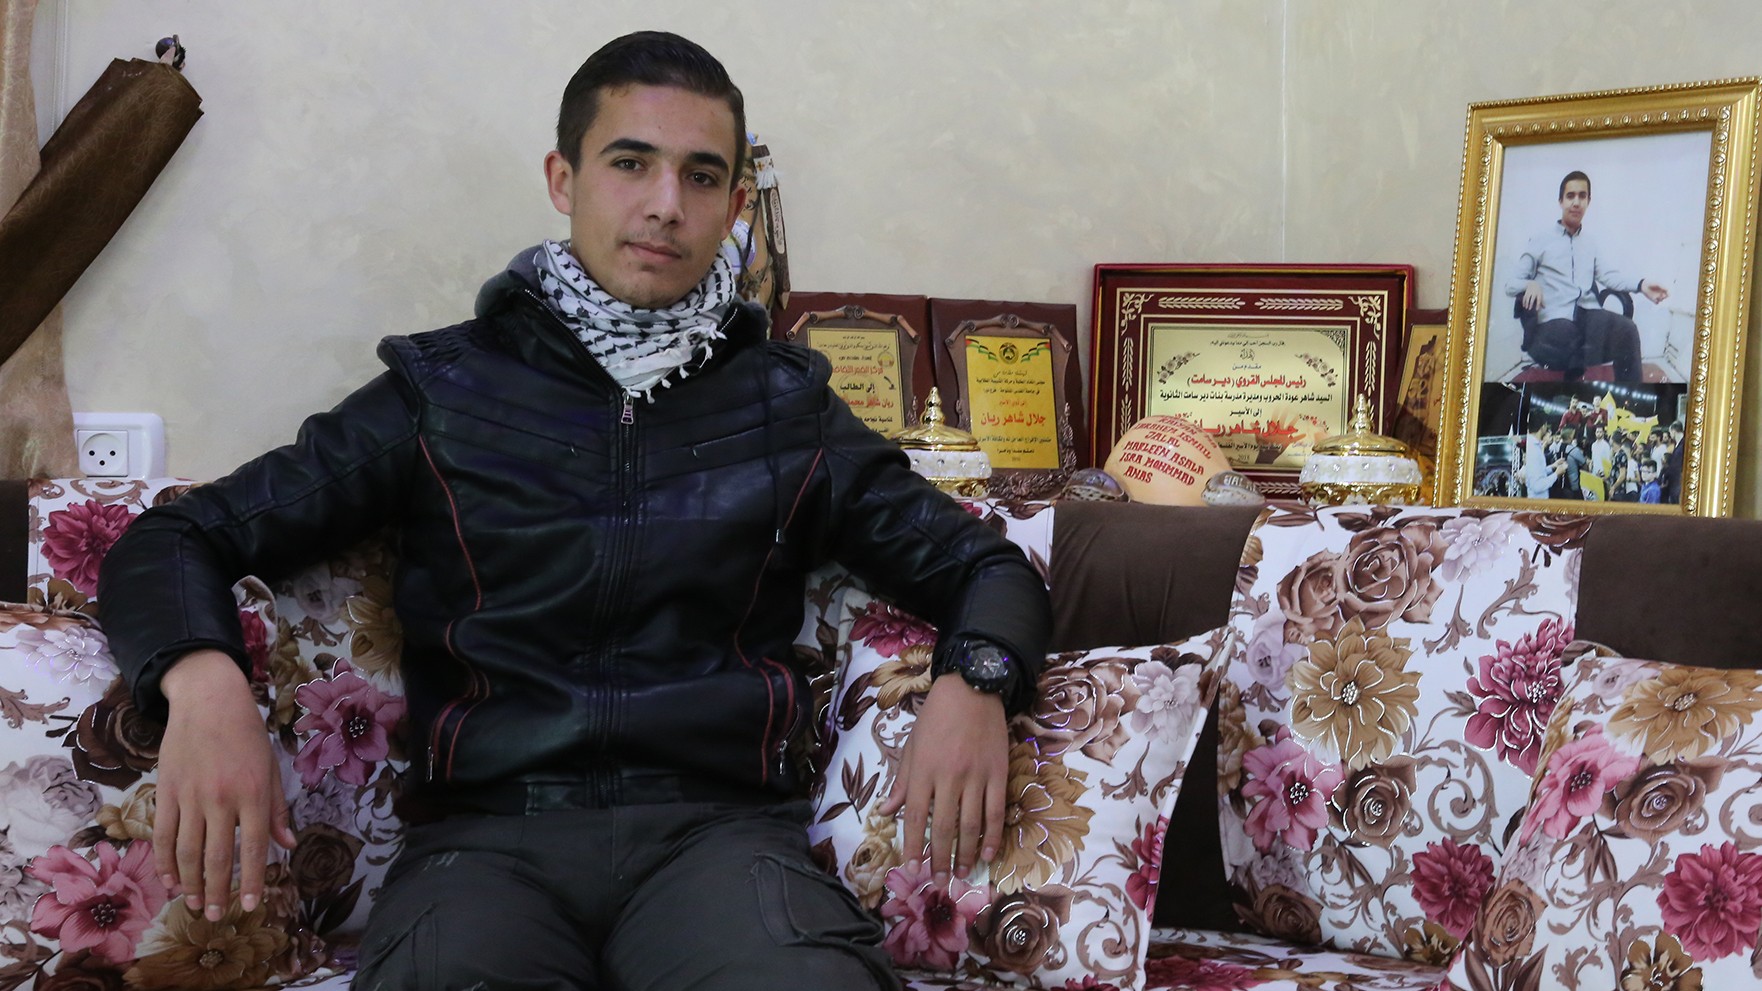 jalal palestine boy leg amputated in israeli prison